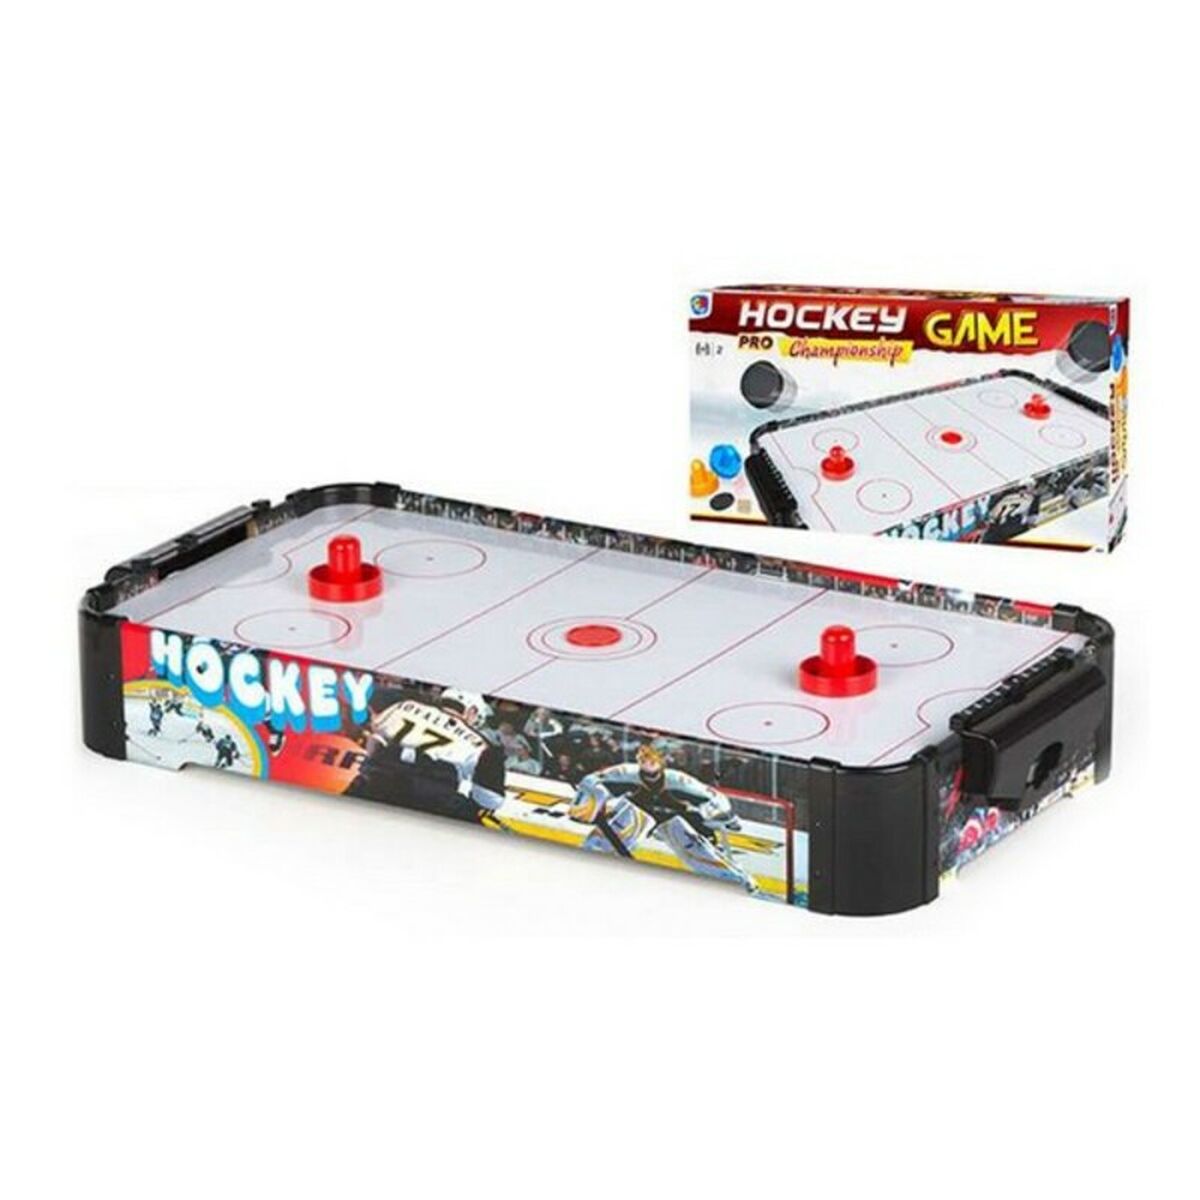 Board game Air Hockey Pro Championship (74 x 36 x 11 cm)